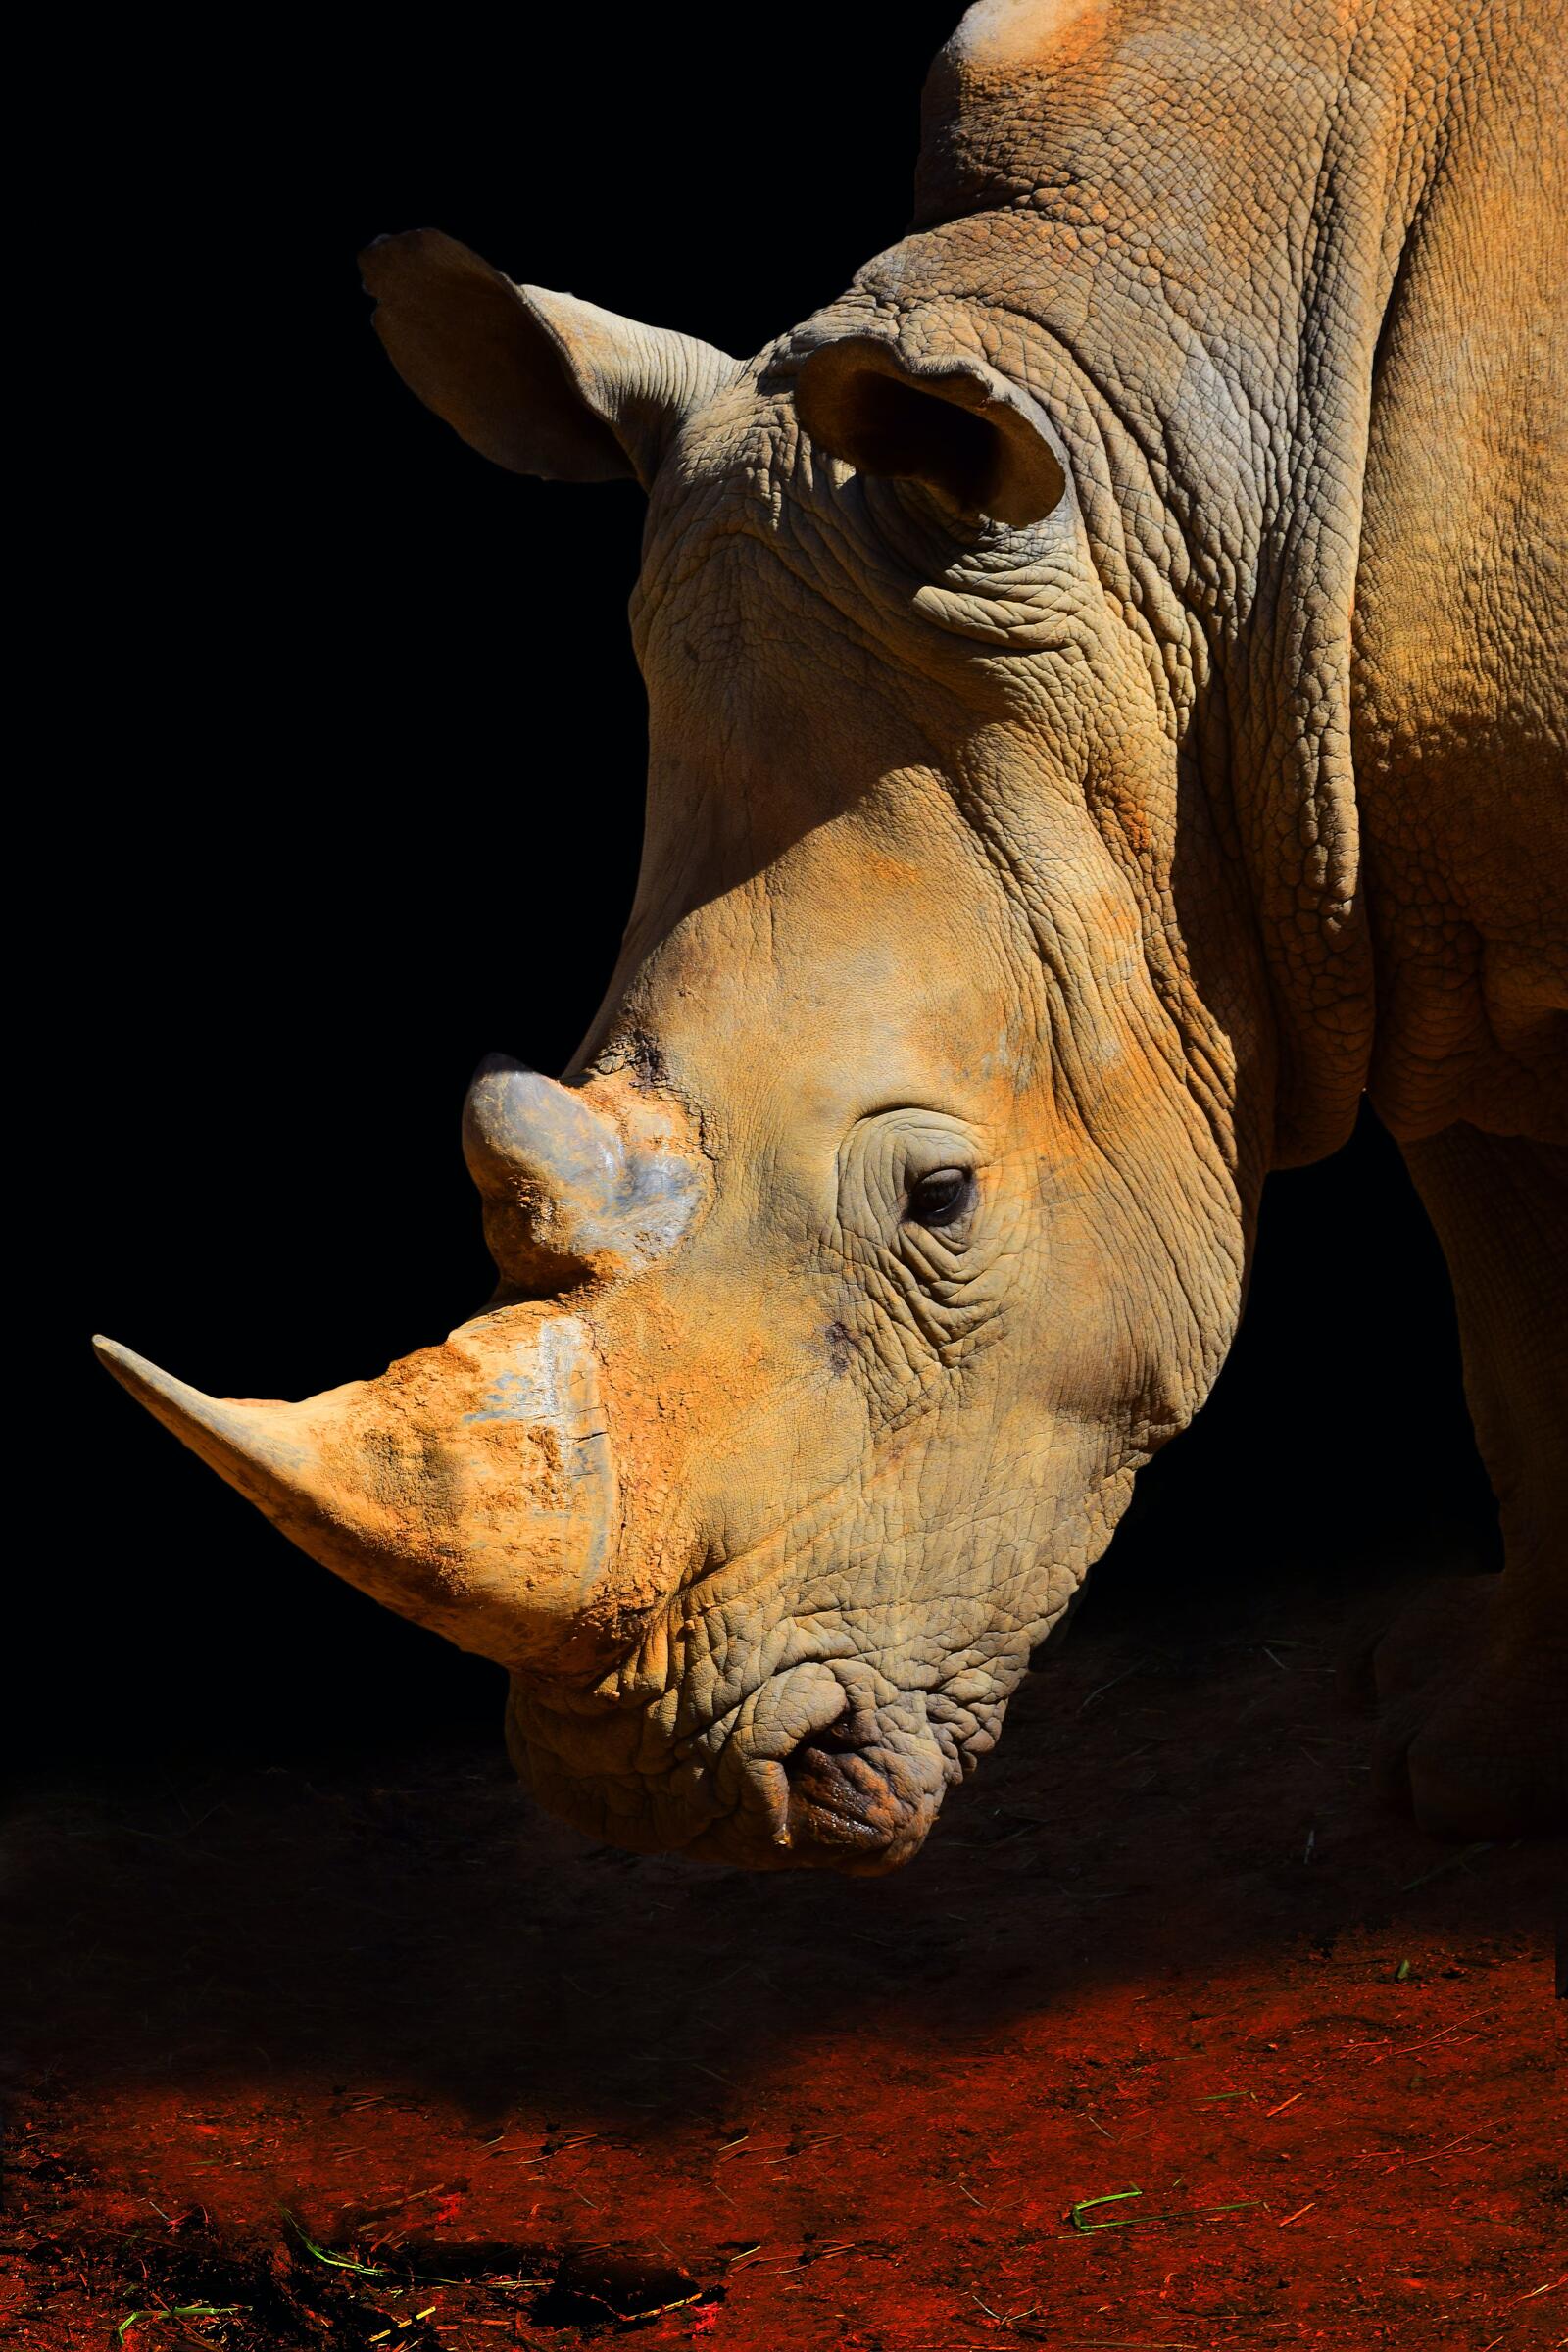 Wallpapers rhinoceros animal portrait on the desktop